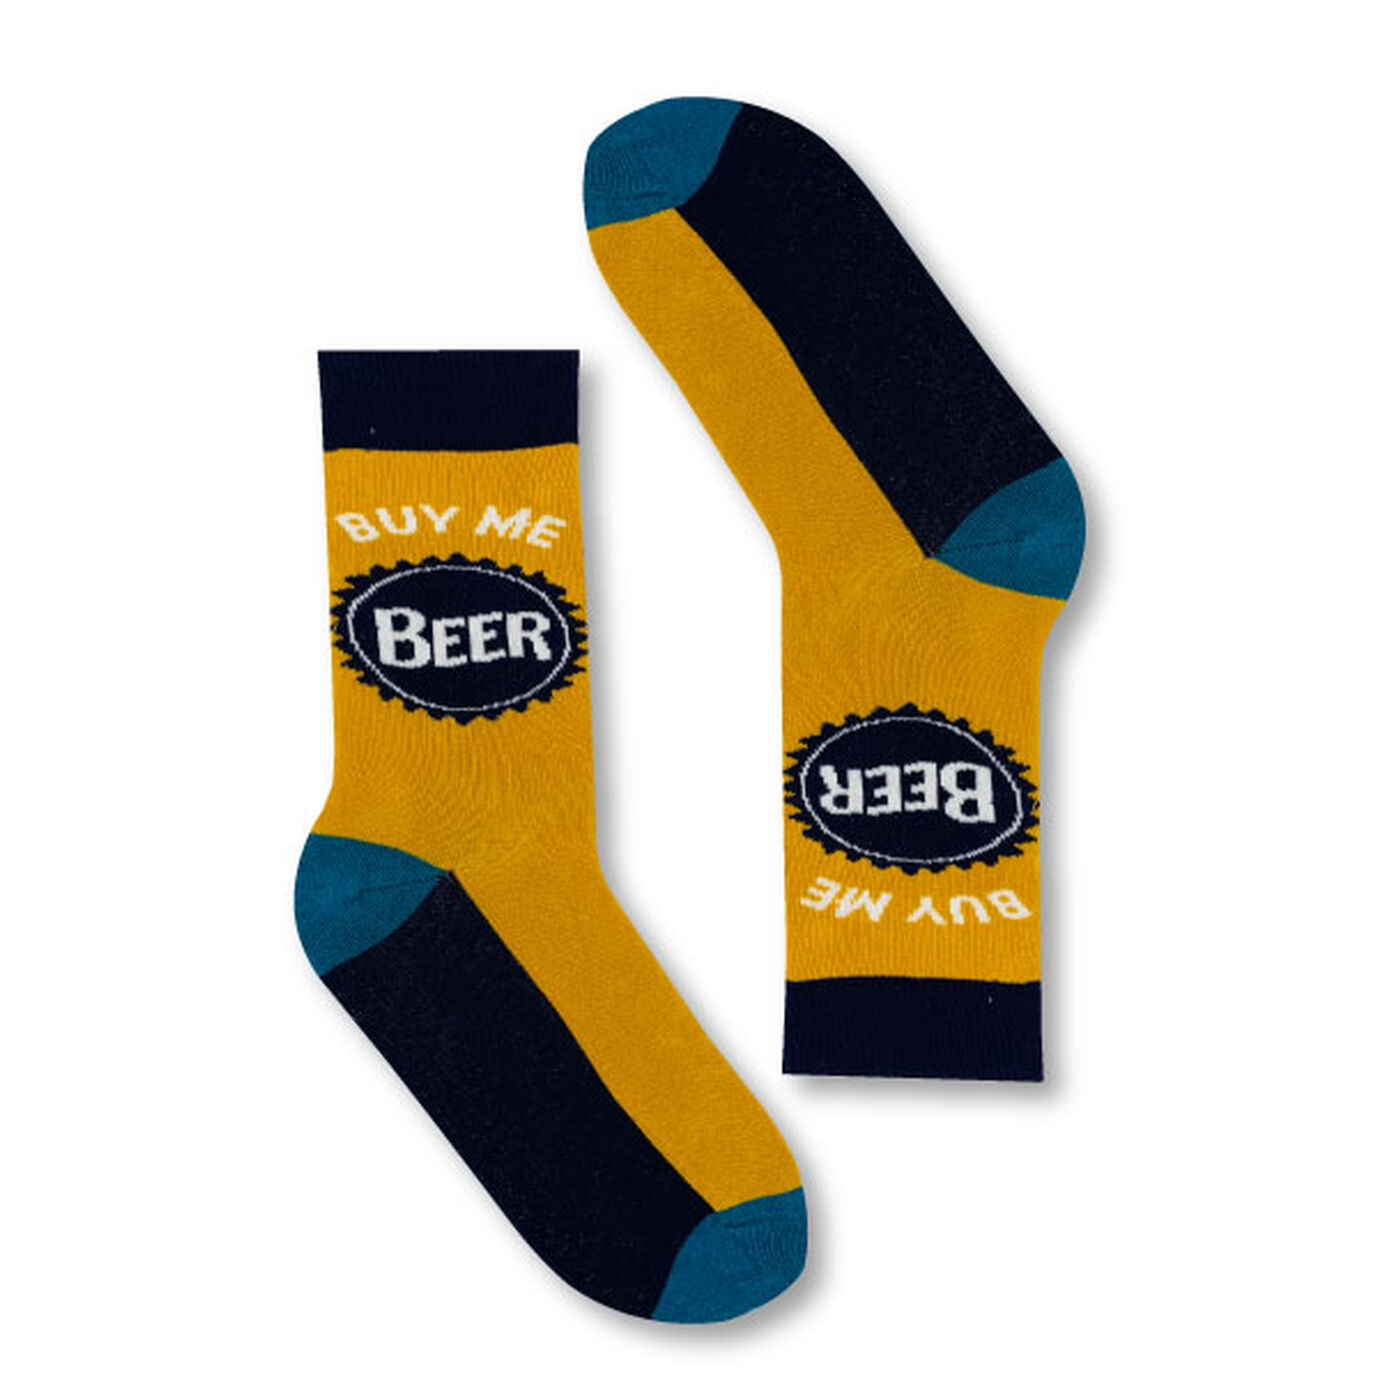 Buy Men's Beer Socks Gift Set - 3 Pairs for GBP 8.99 | Card Factory UK